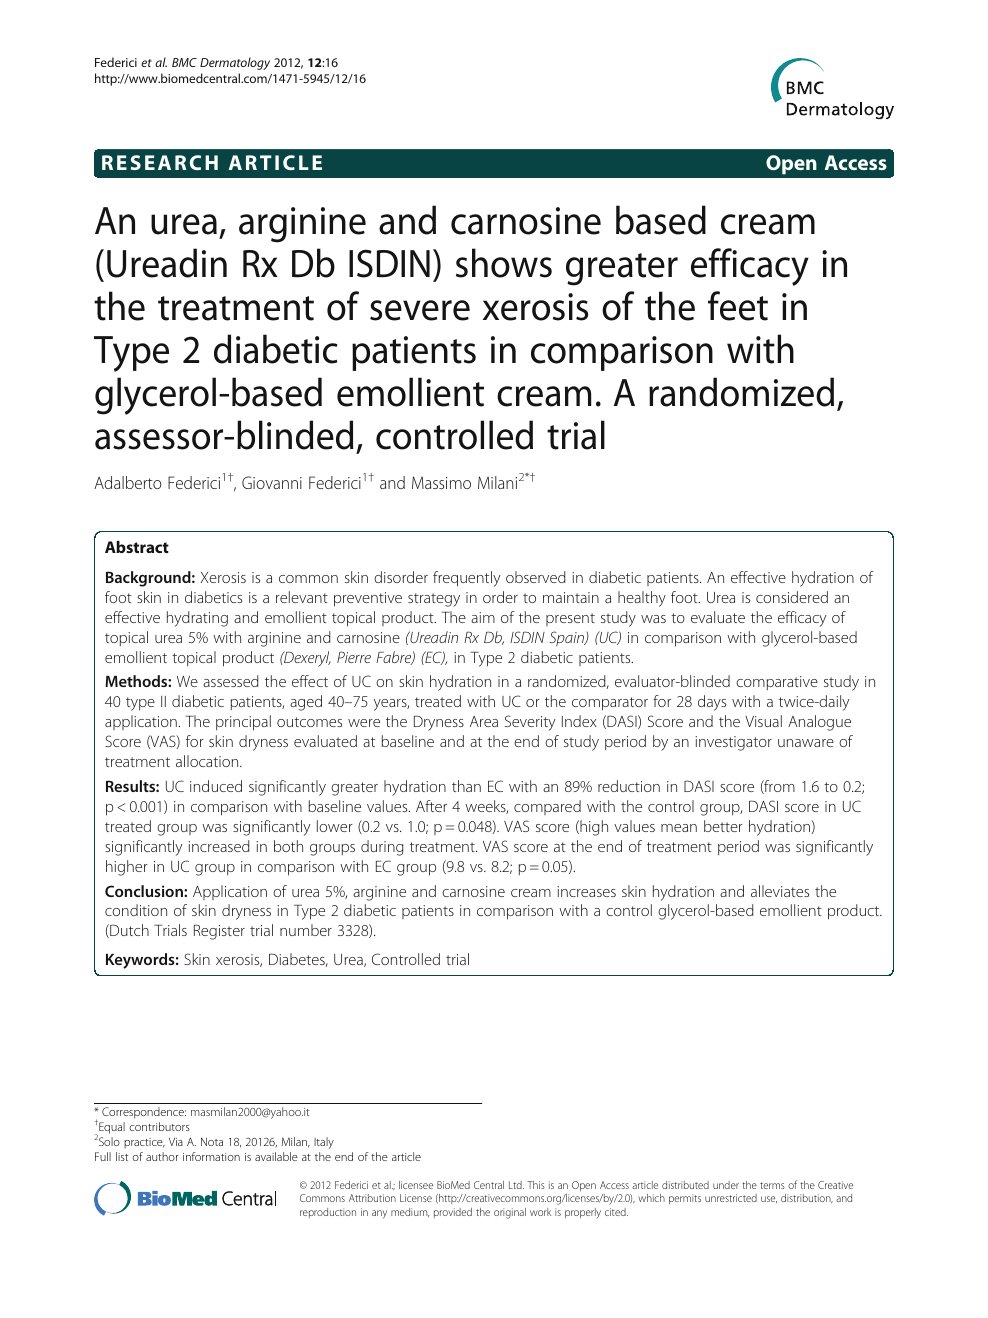 An Urea Arginine And Carnosine Based Cream Ureadin Rx Db Isdin